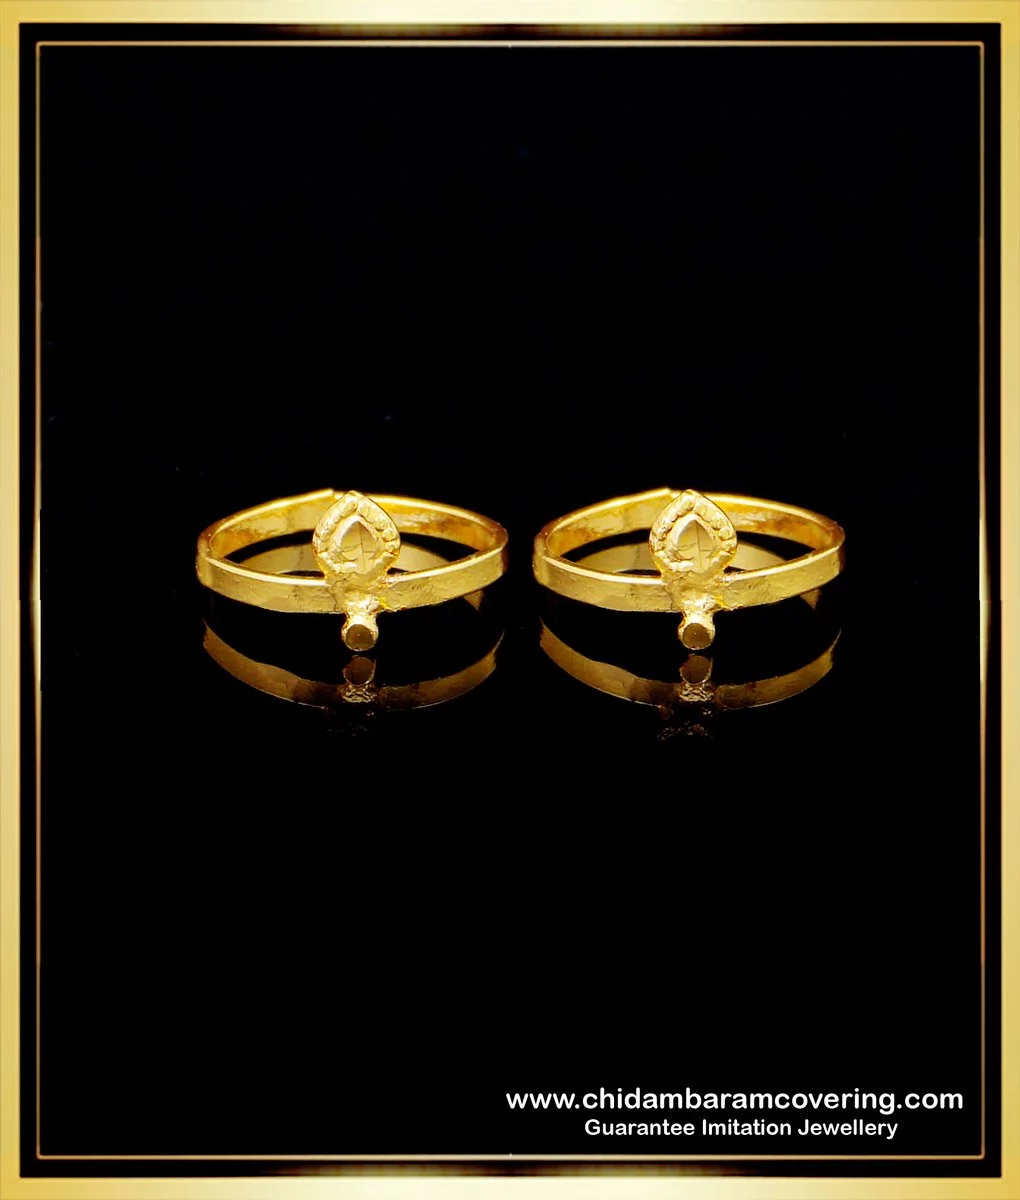 Lightweight Gold Mens Womens Wedding Band Solid 10K/14K/18K  Rose/White/Yellow Gold Half Round Light Ring 2.5mm Wide | Amazon.com